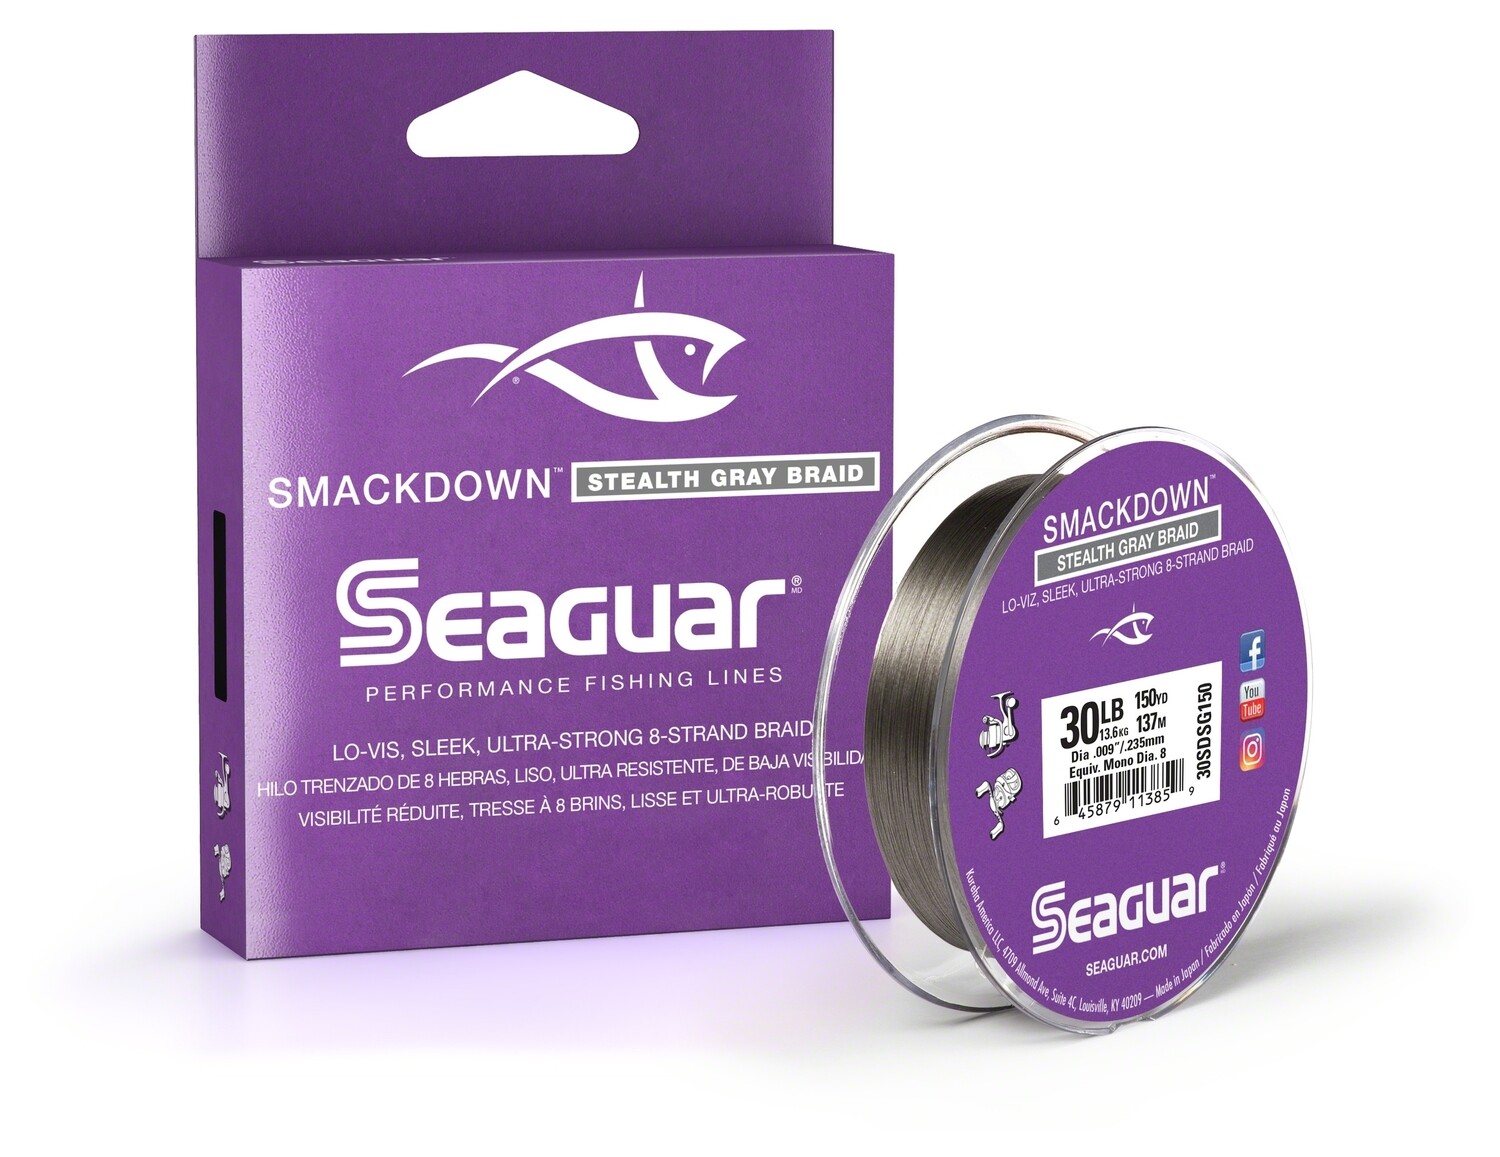 Seaguar Smackdown Braid 10 lb 150 yd Stealth Gray